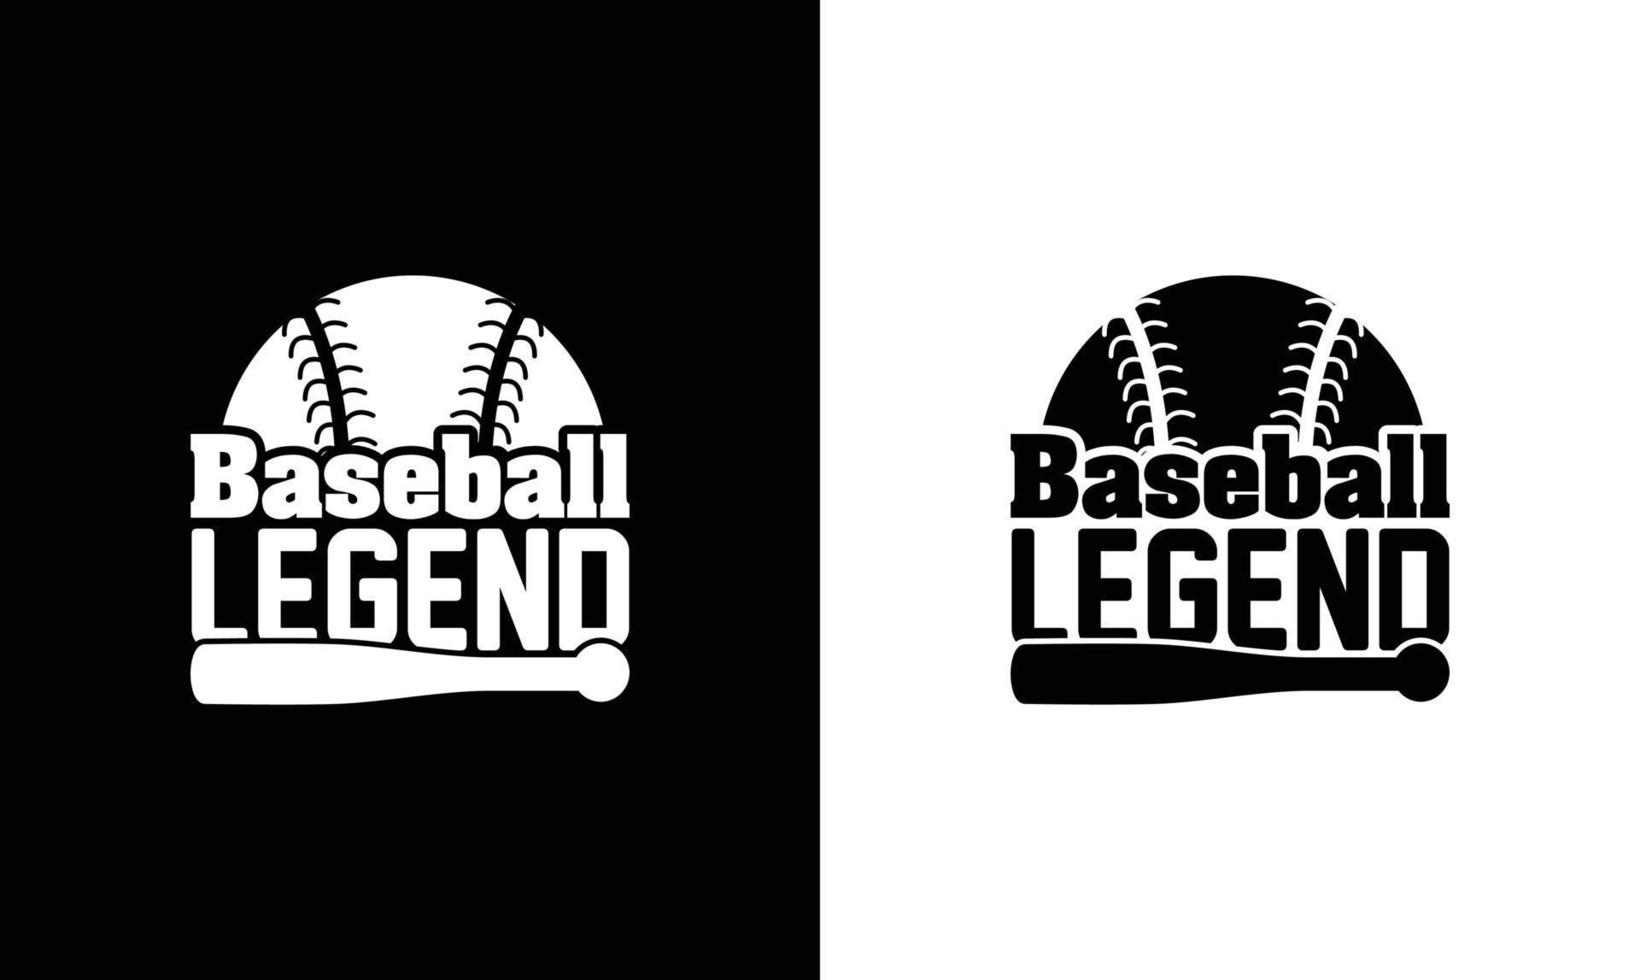 baseboll Citat t skjorta design, typografi vektor